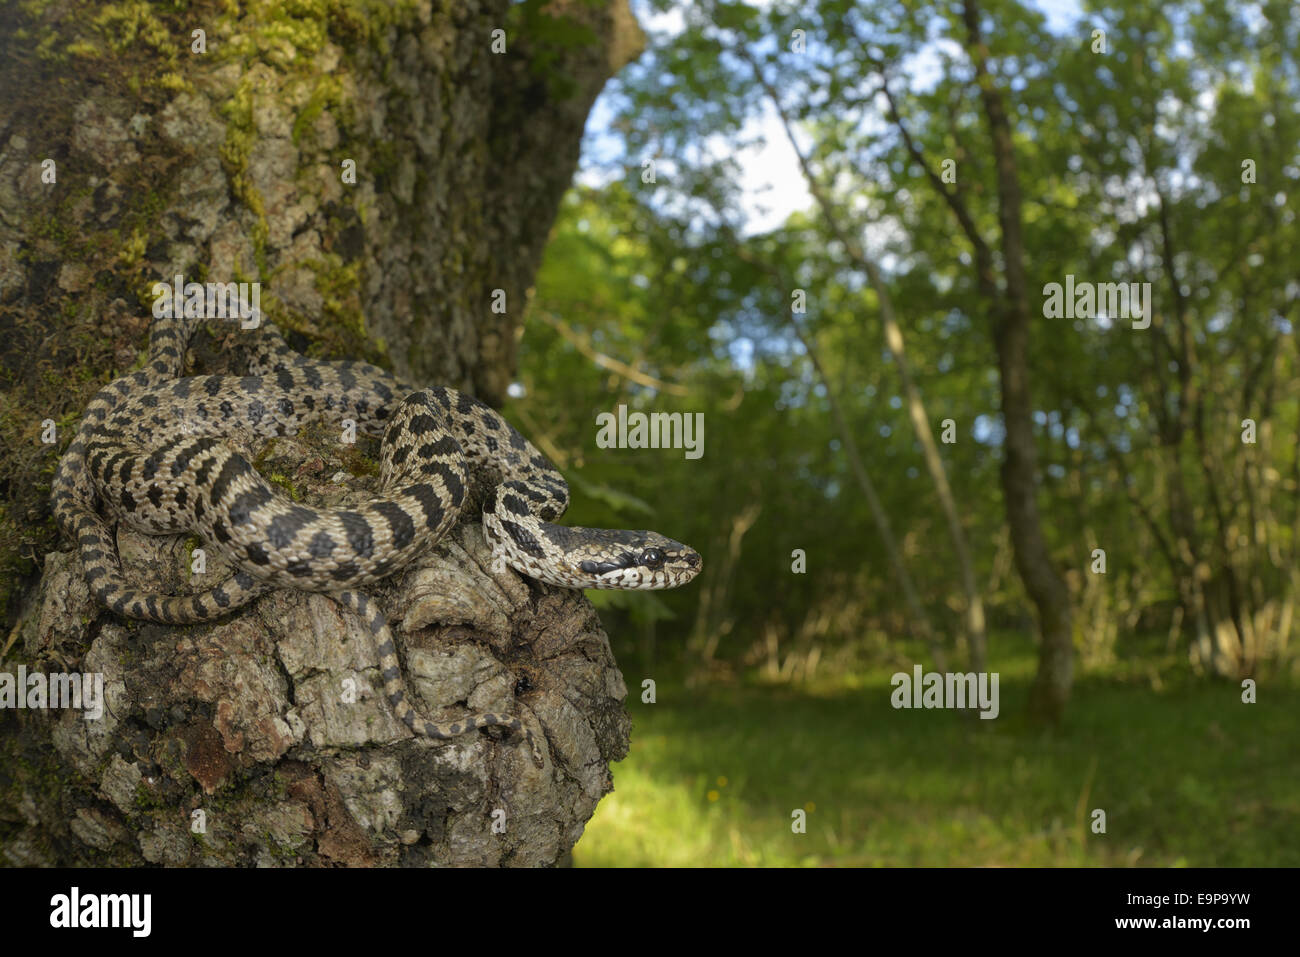 Four-lined Snake (Elaphe quatuorlineata) young, coiled on Downy Oak (Quercus pubescens) trunk, Croatia, April Stock Photo